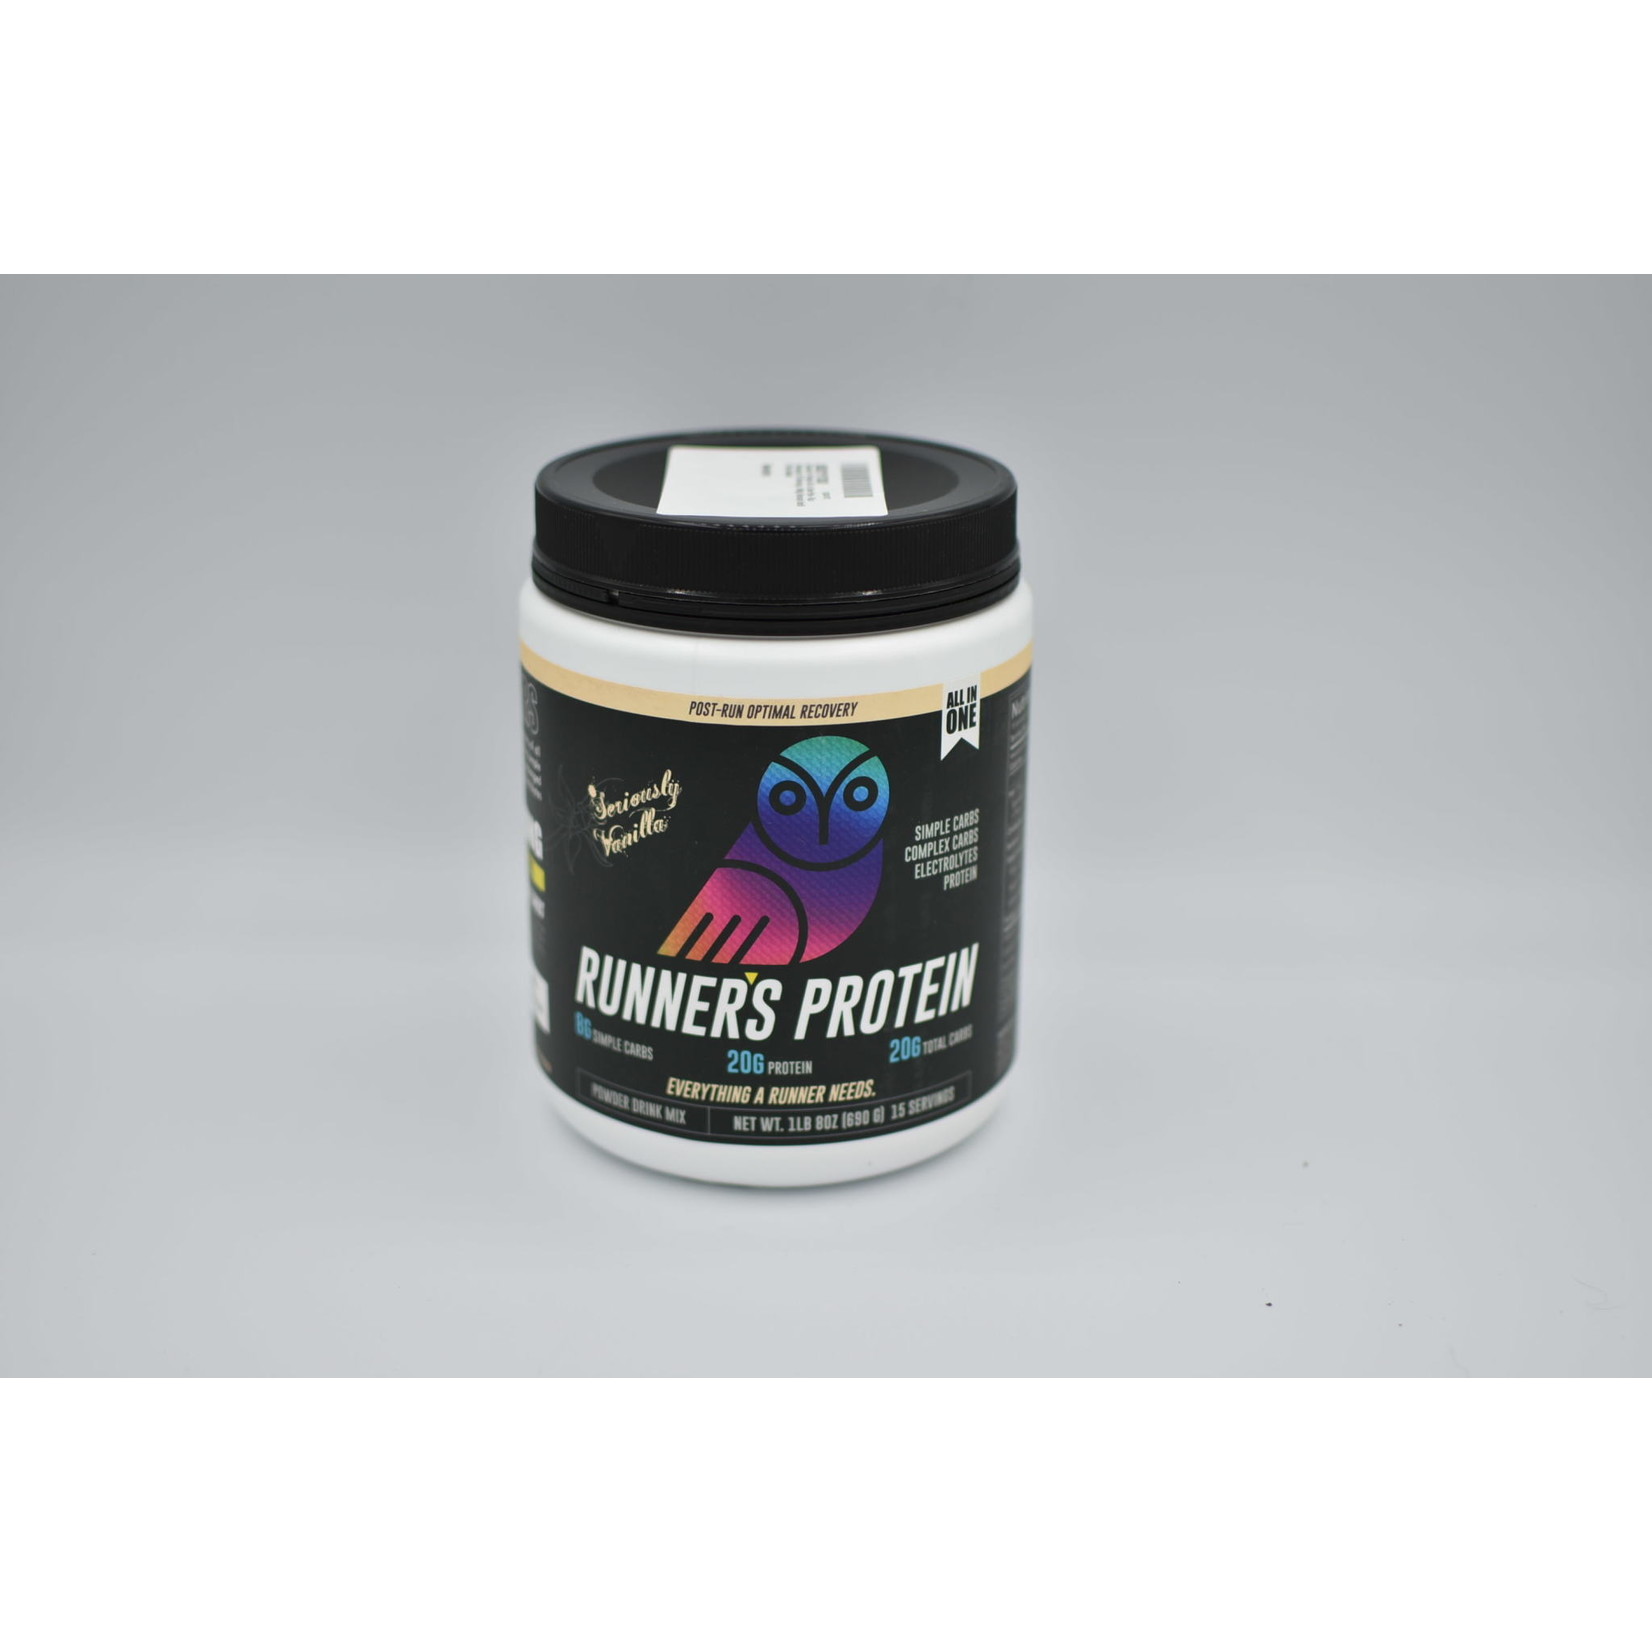 Runner's Protein